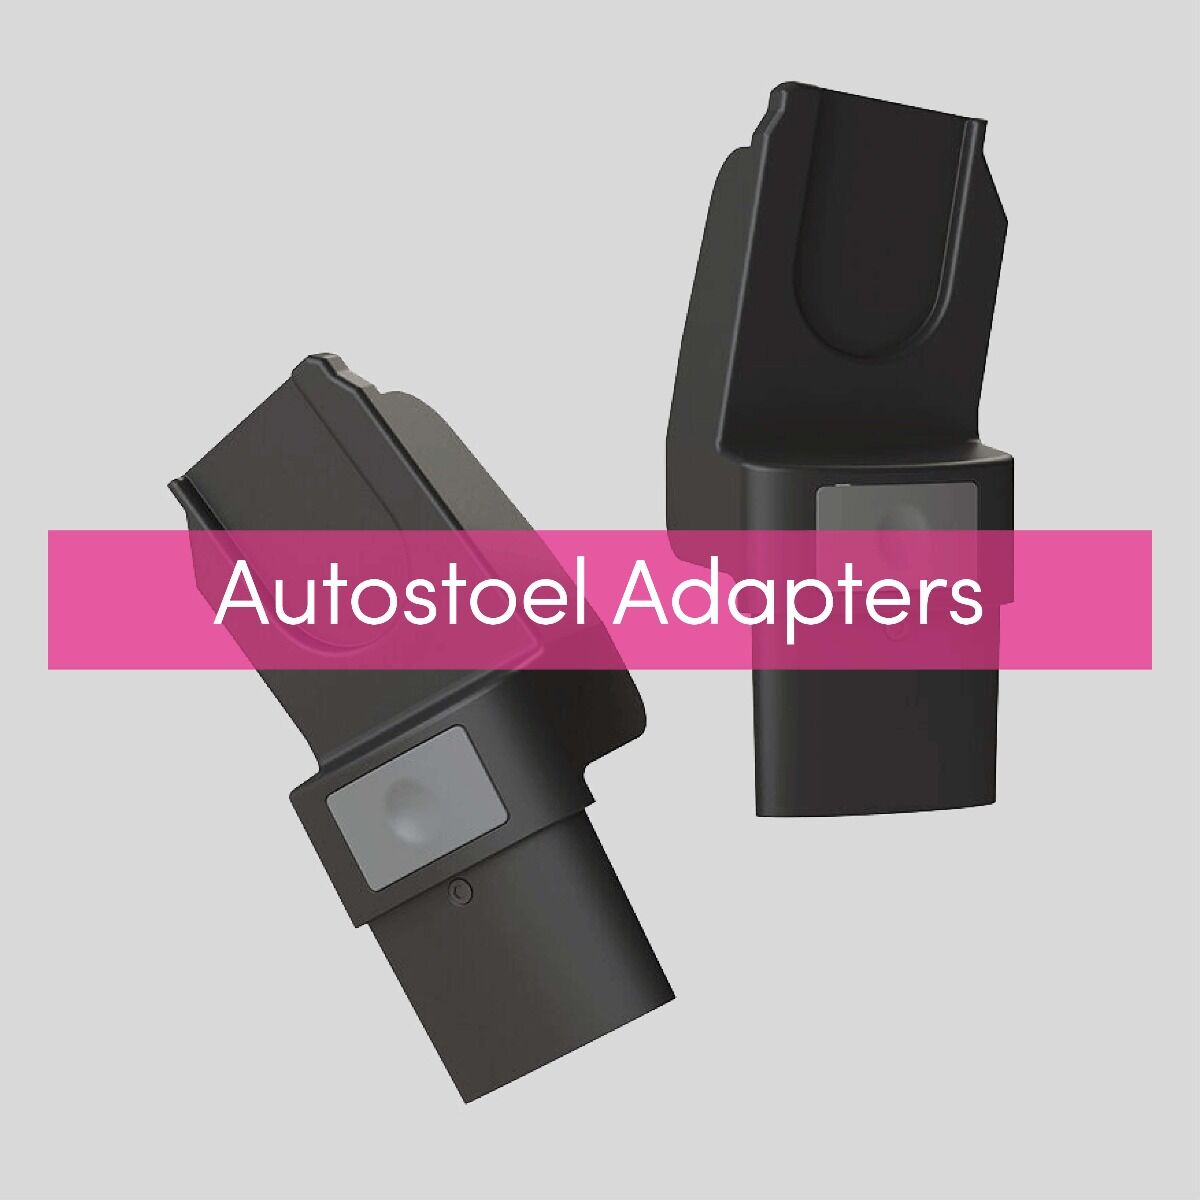 Autostoel adapters